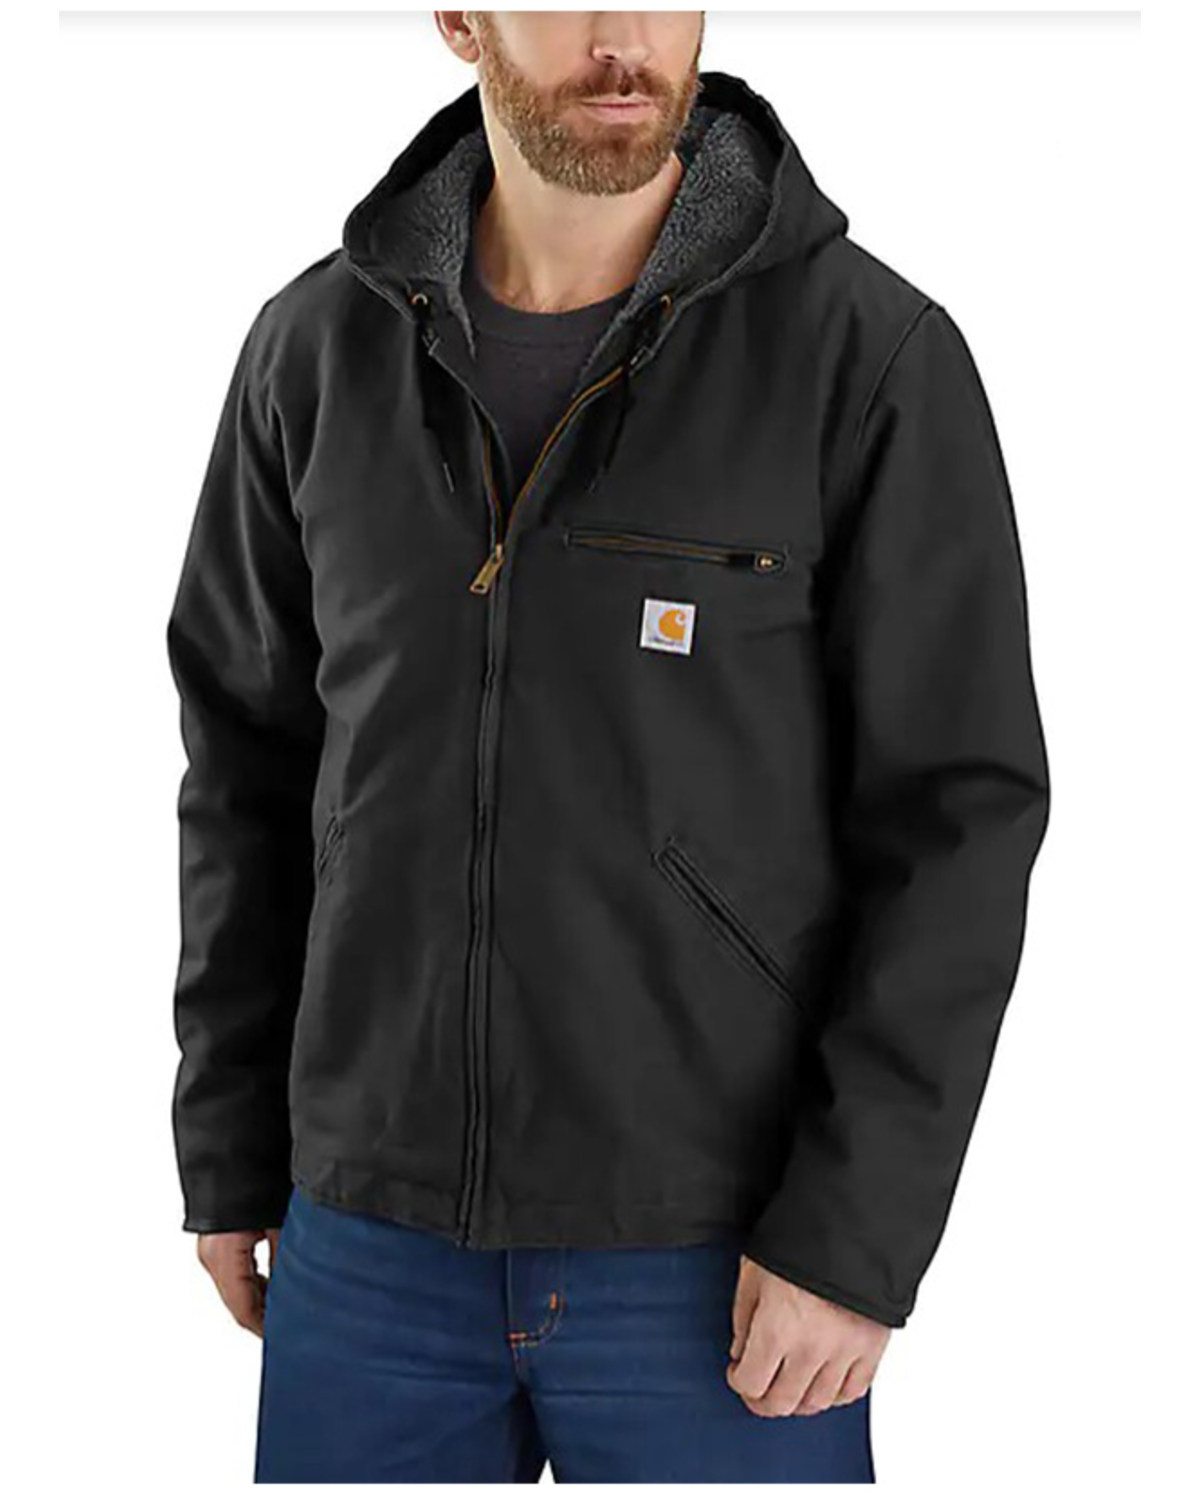 Carhartt Men's Washed Duck Sherpa Lined Hooded Work Jacket